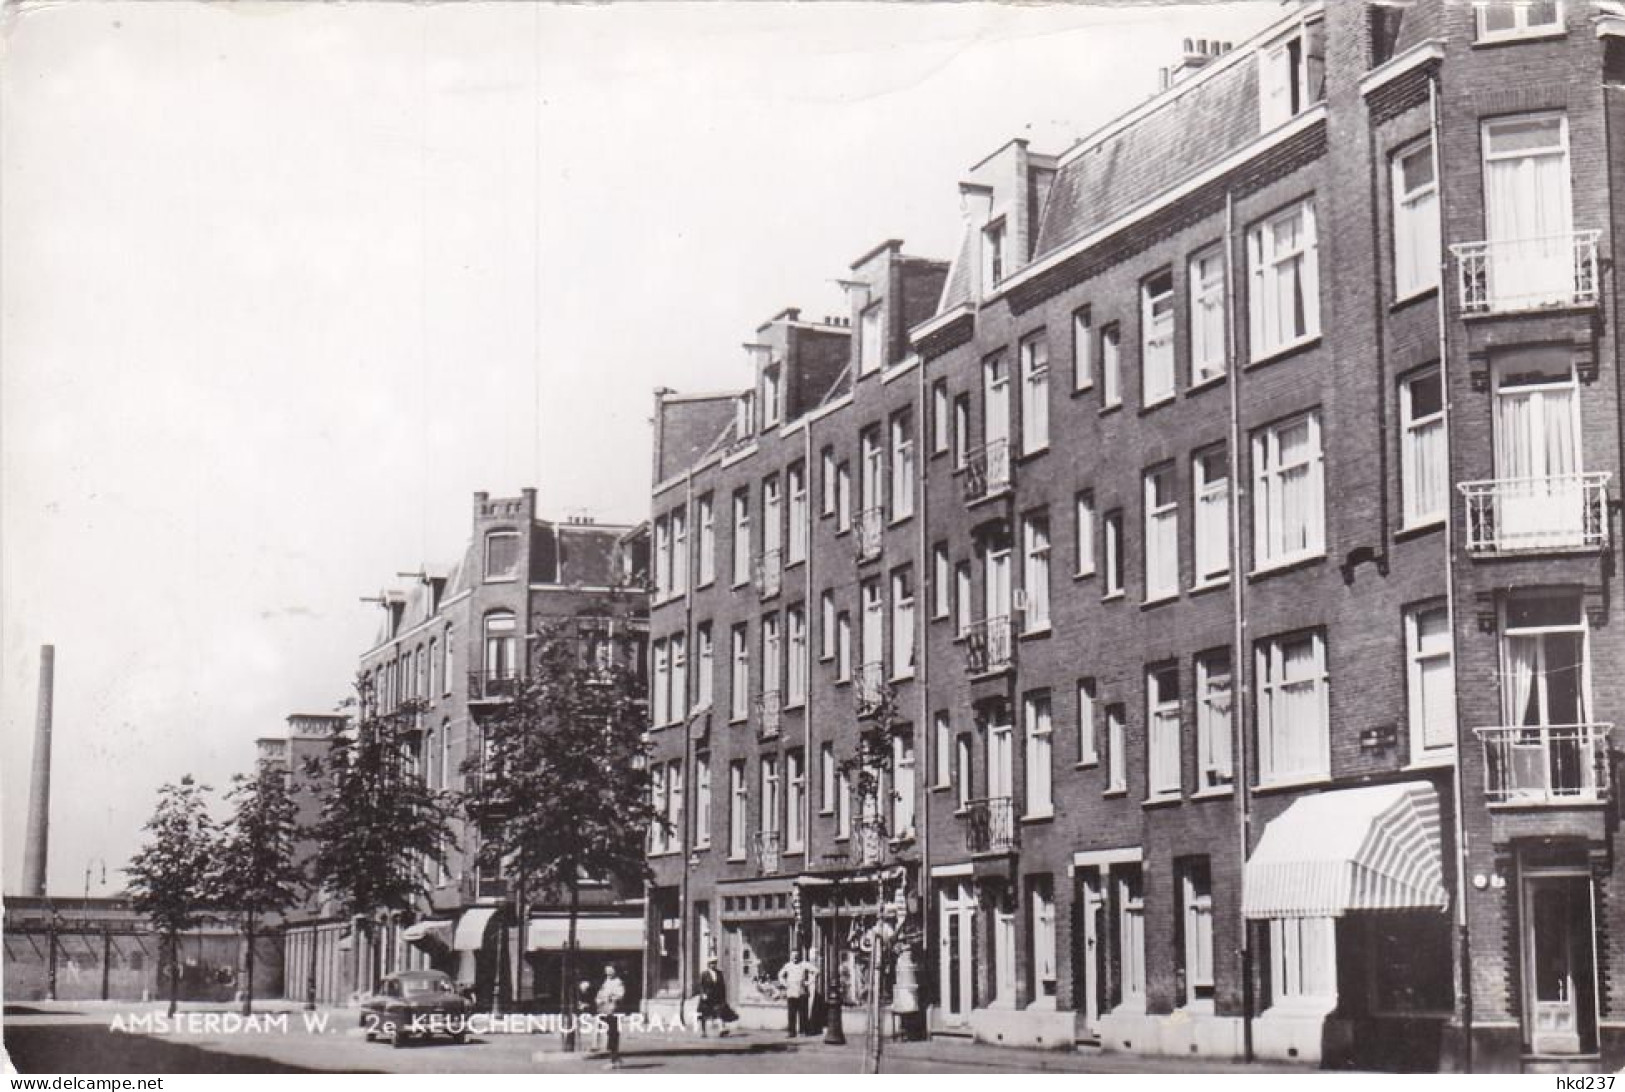 Amsterdam 2e Keucheniusstraat Levendig Oude Auto Markthallen     1834 - Amsterdam